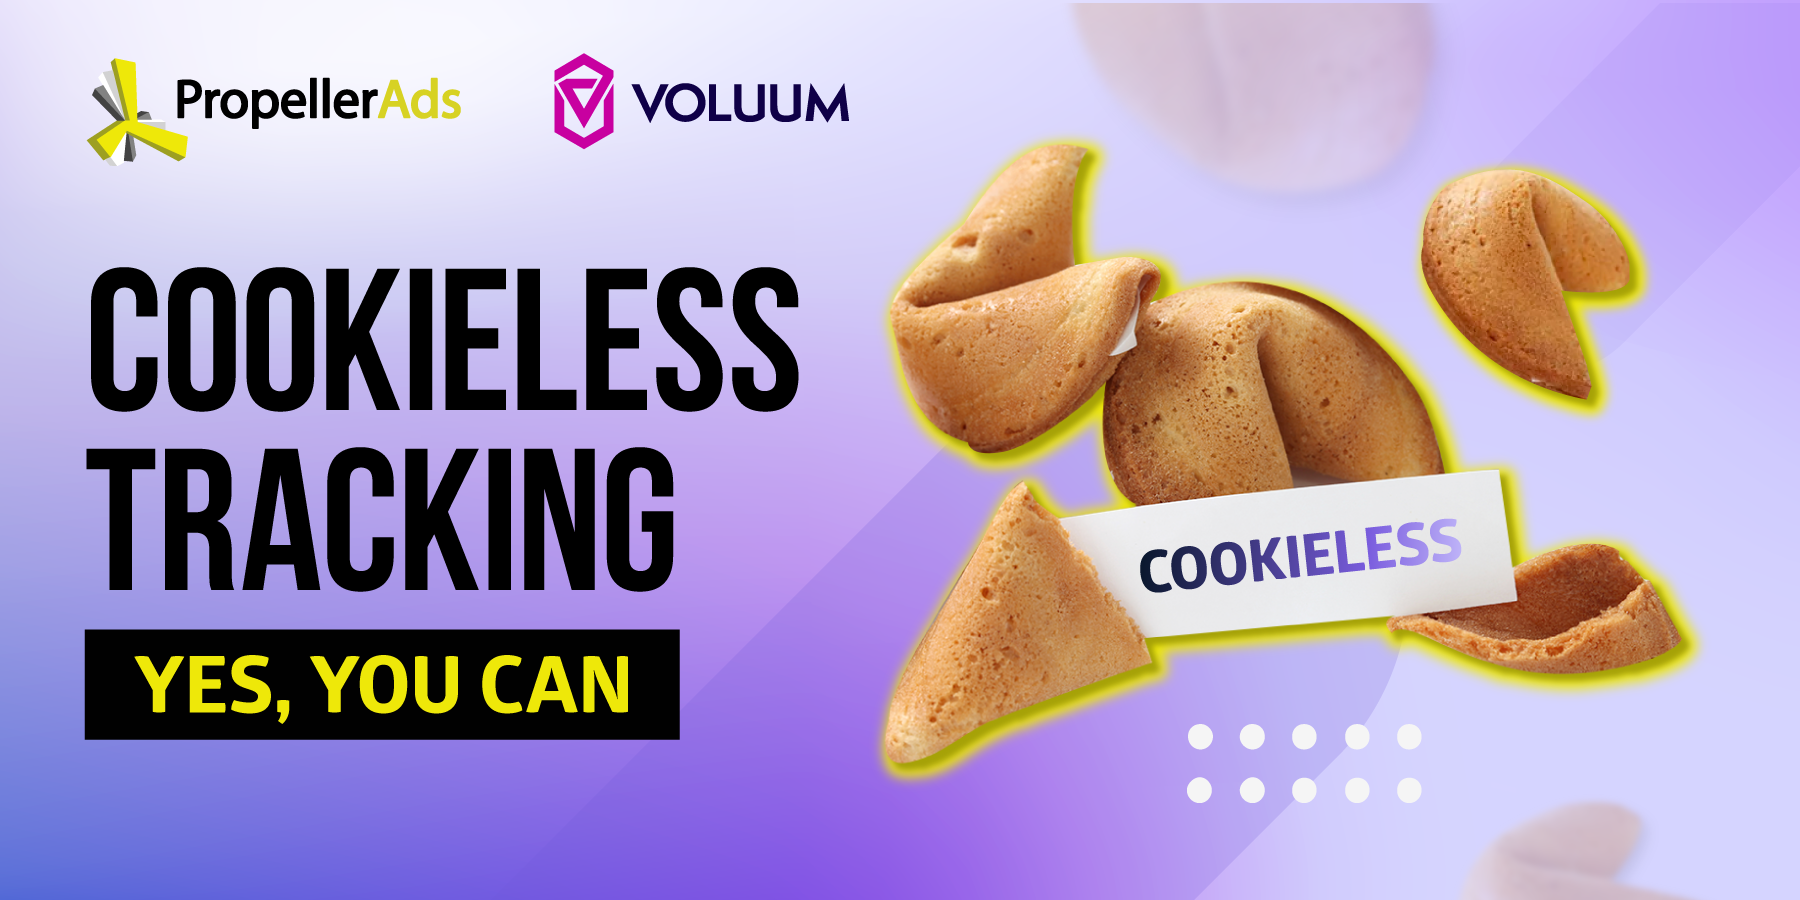 voluum - cookieless tracking